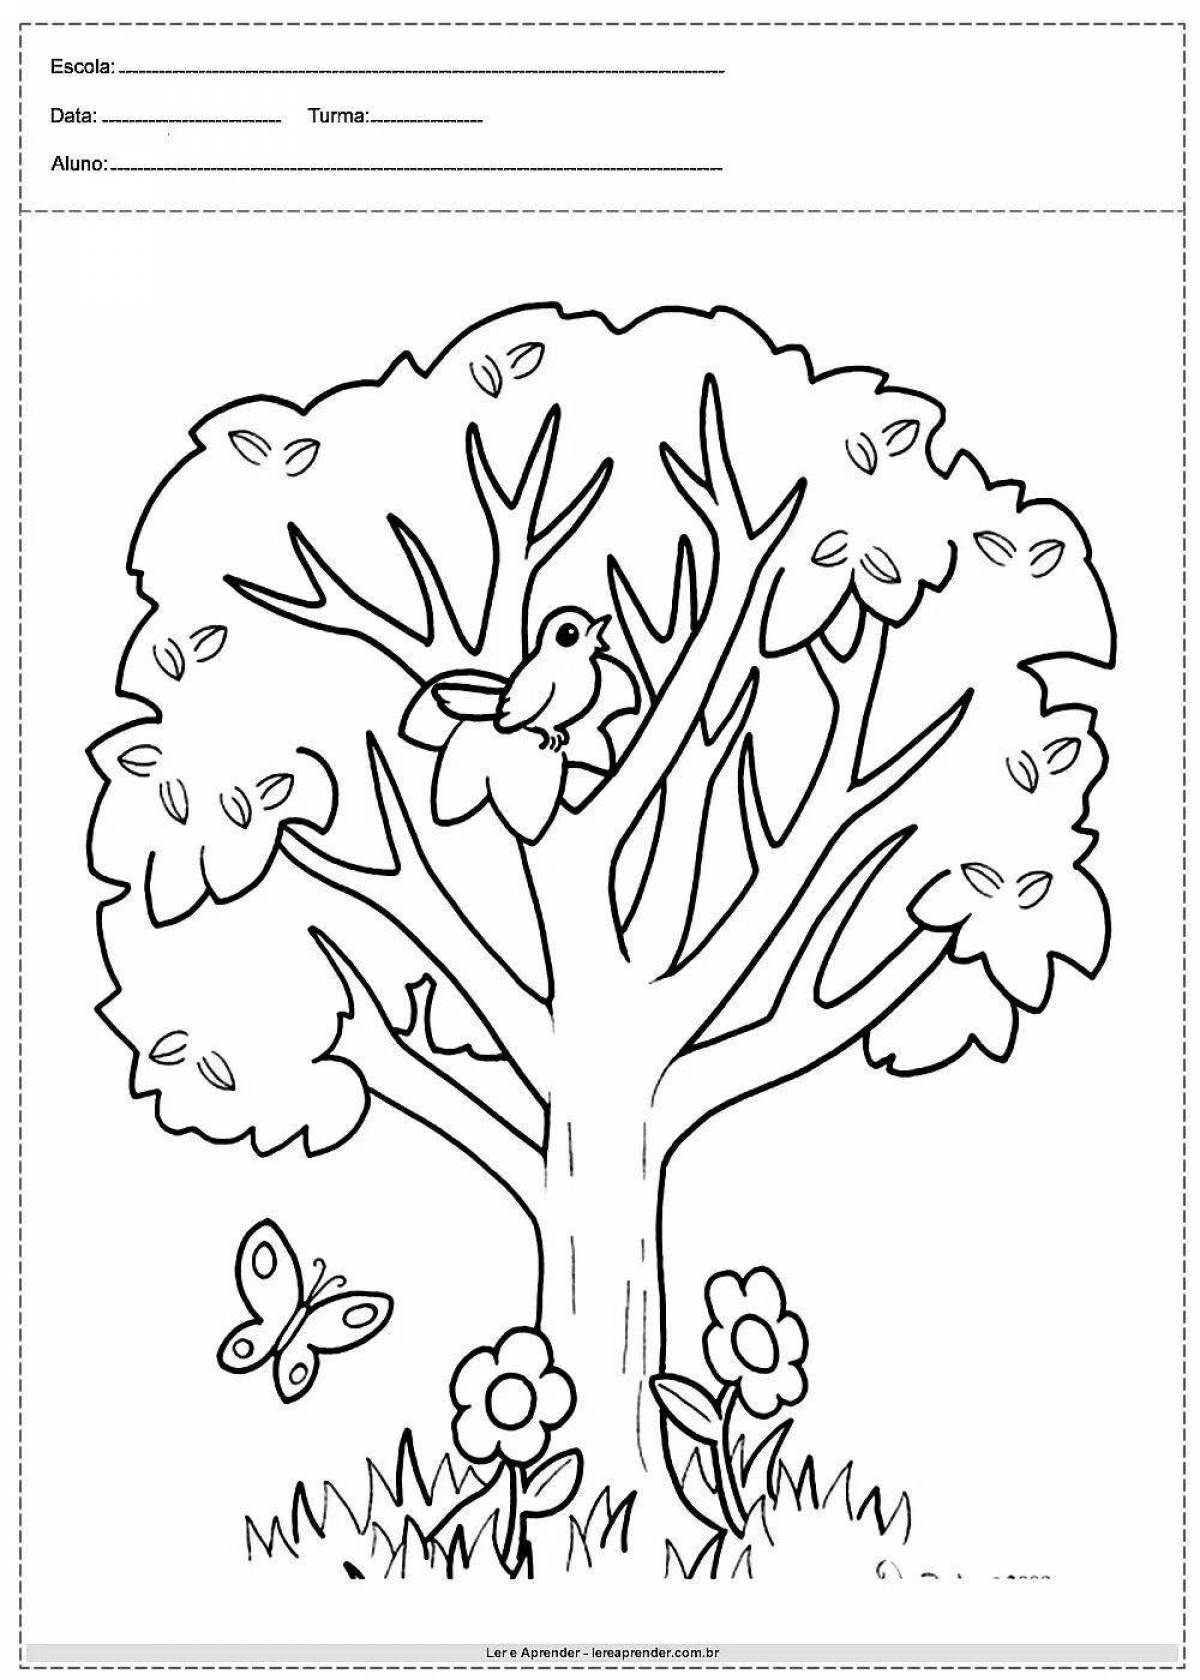 Exotic wonder tree coloring page